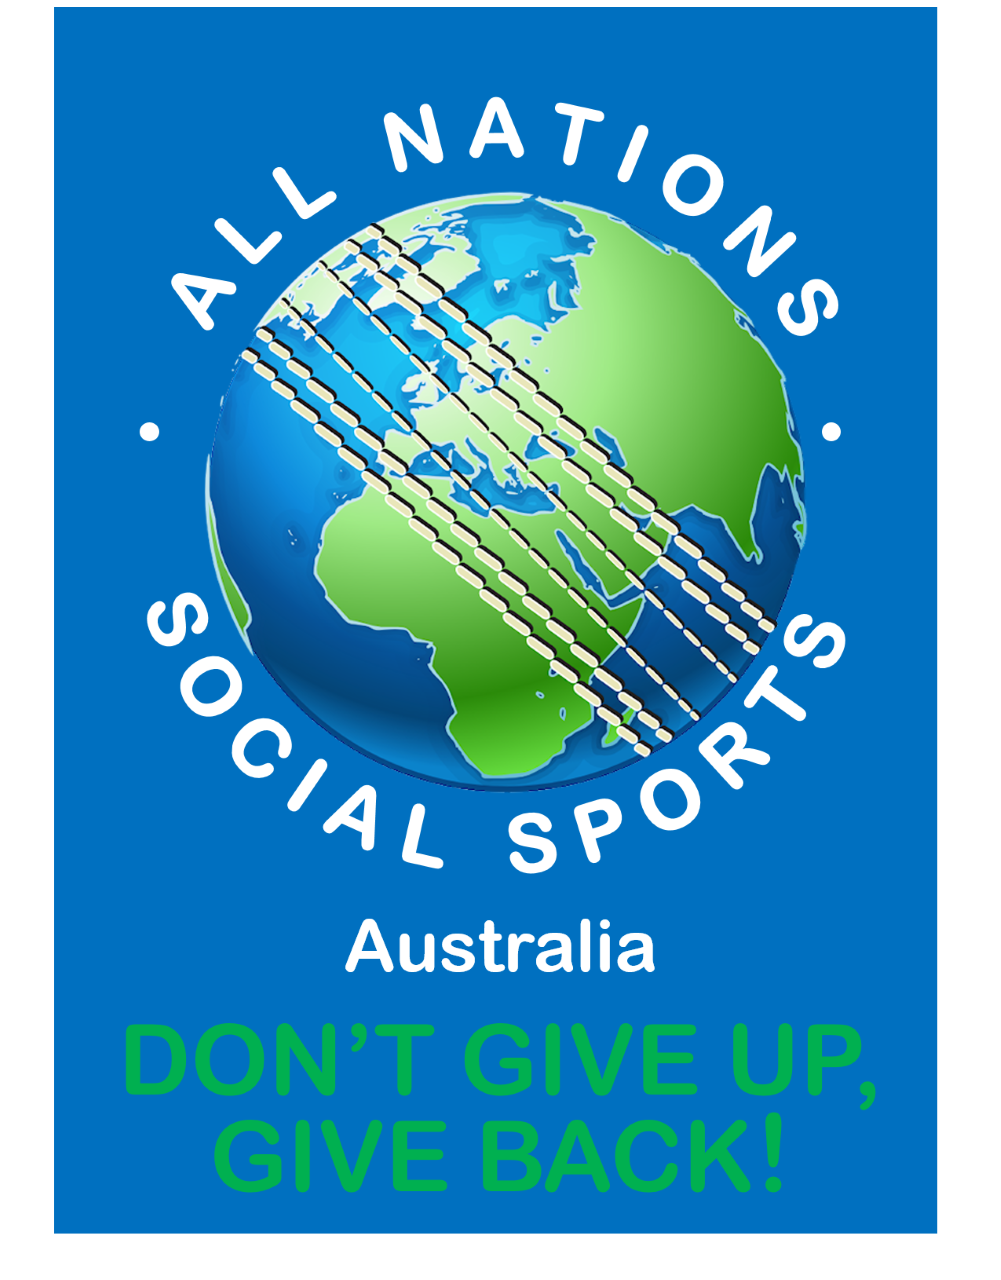 All Nations Social Sport Australia